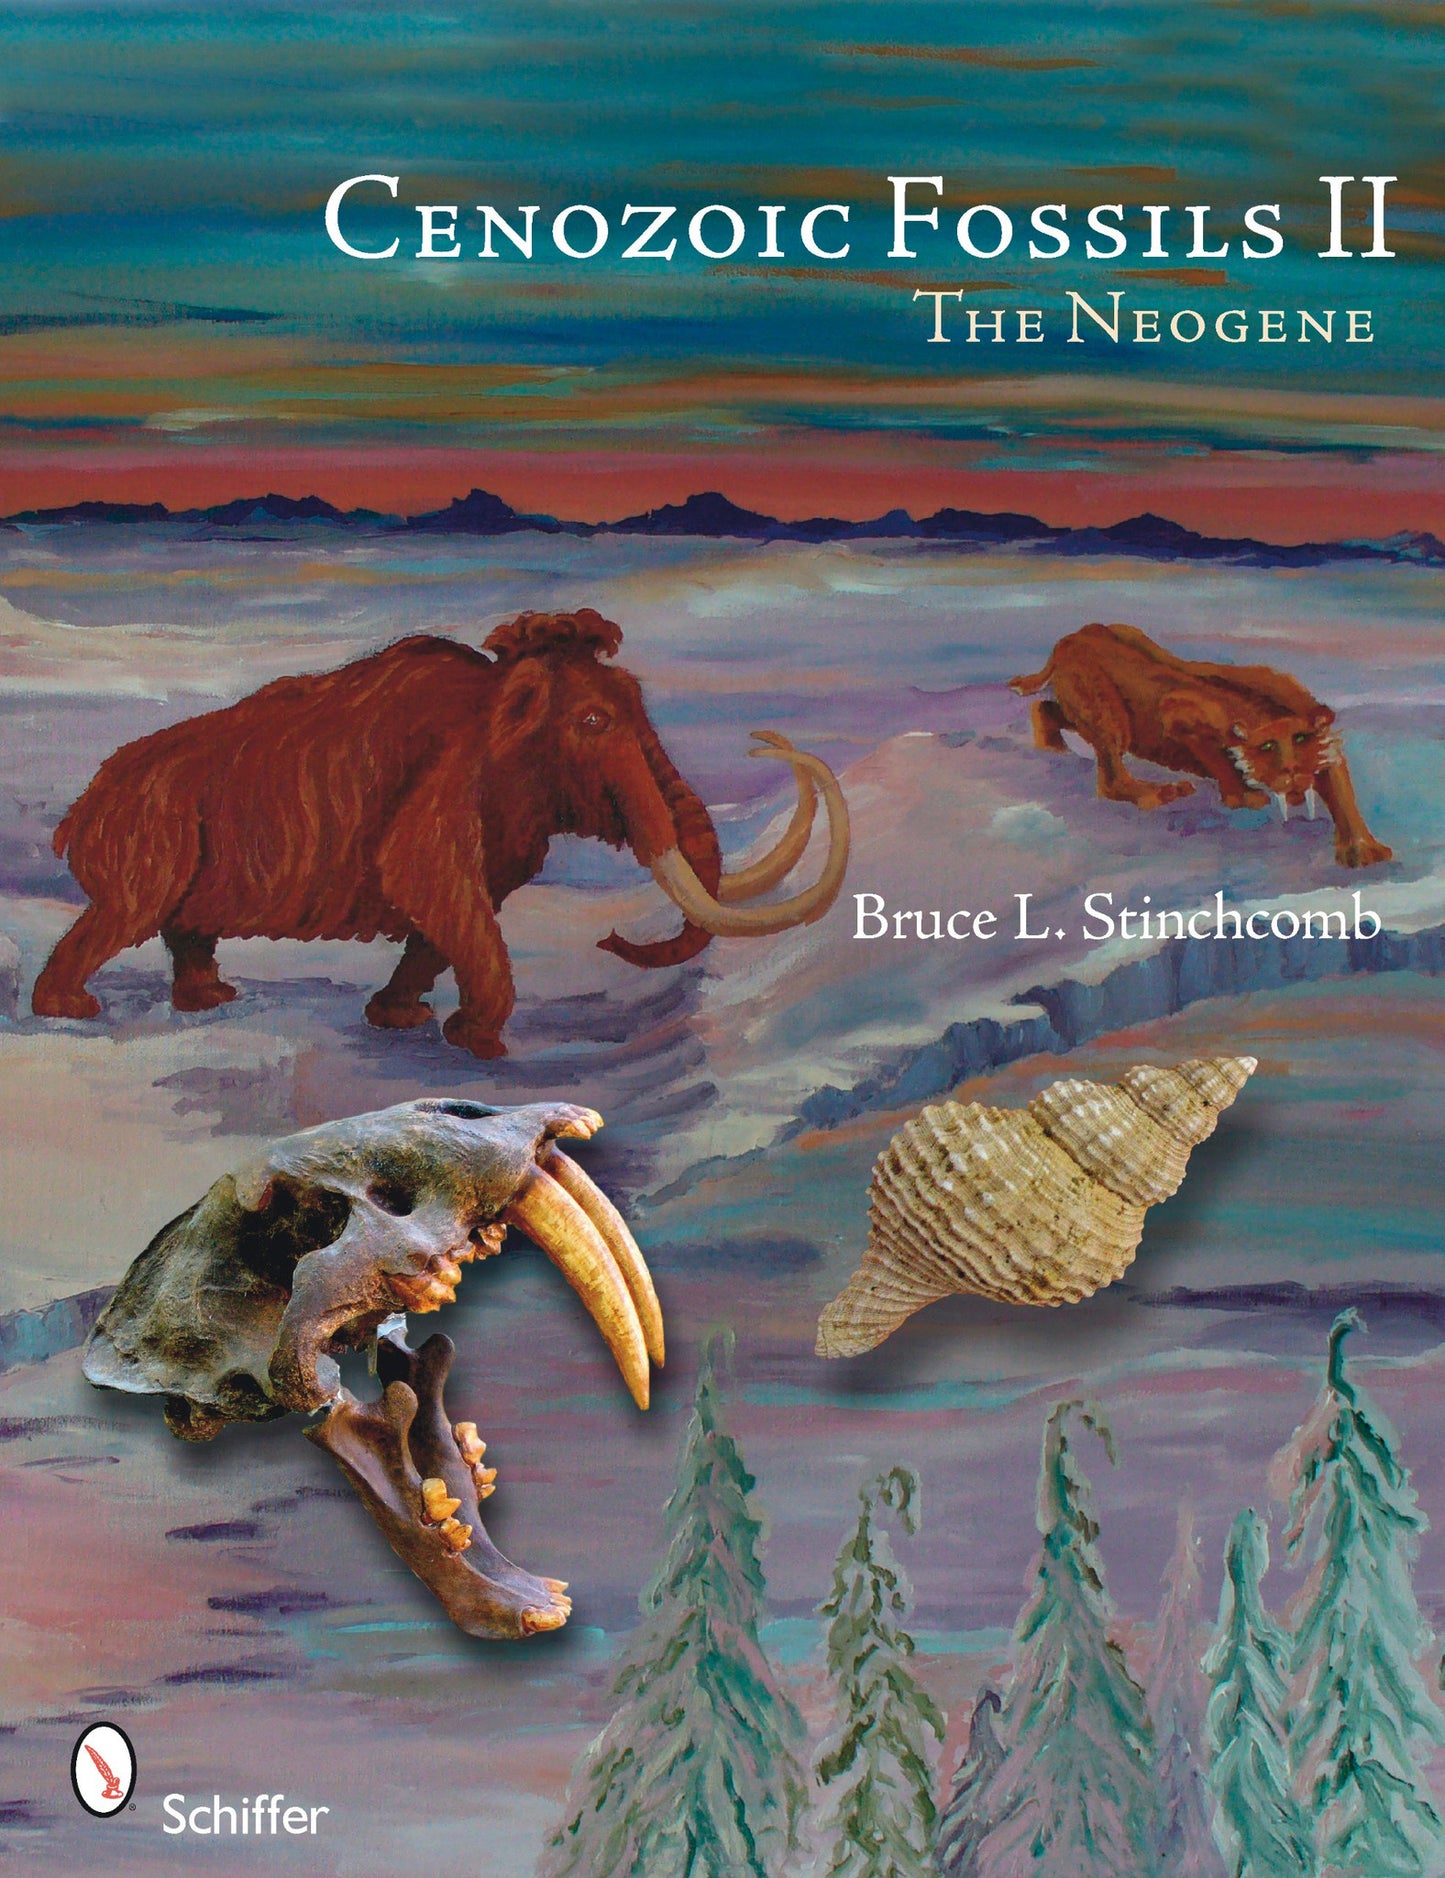 Cenozoic Fossils II: The Neogene by Bruce L. Stinchcomb